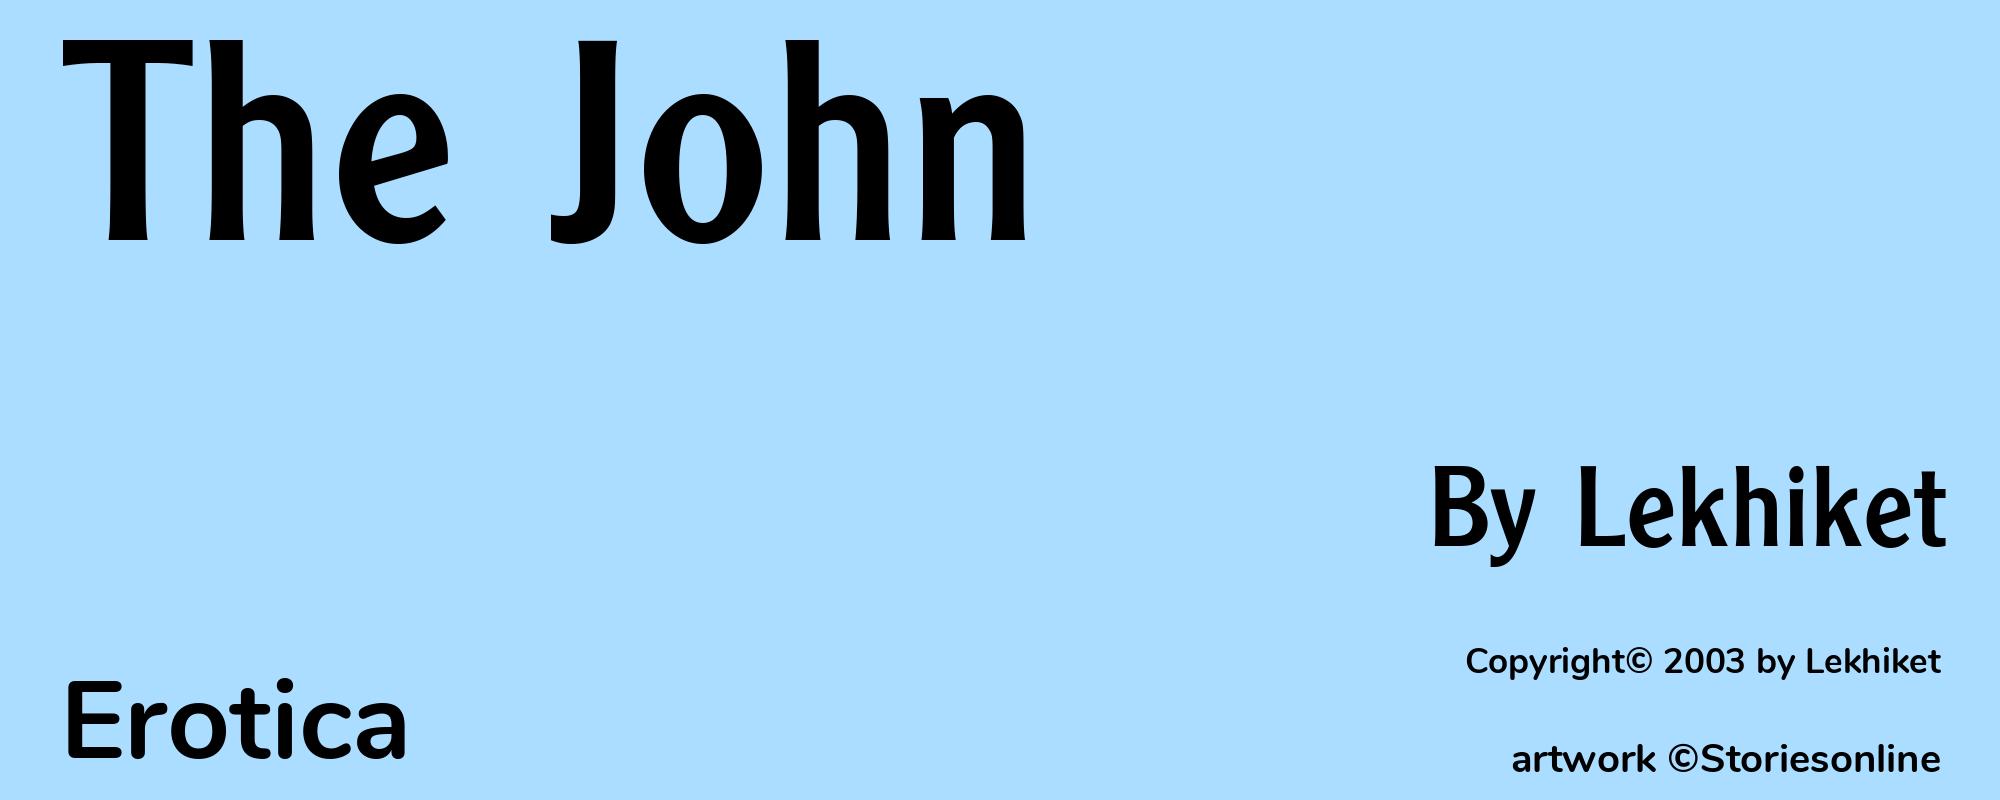 The John - Cover